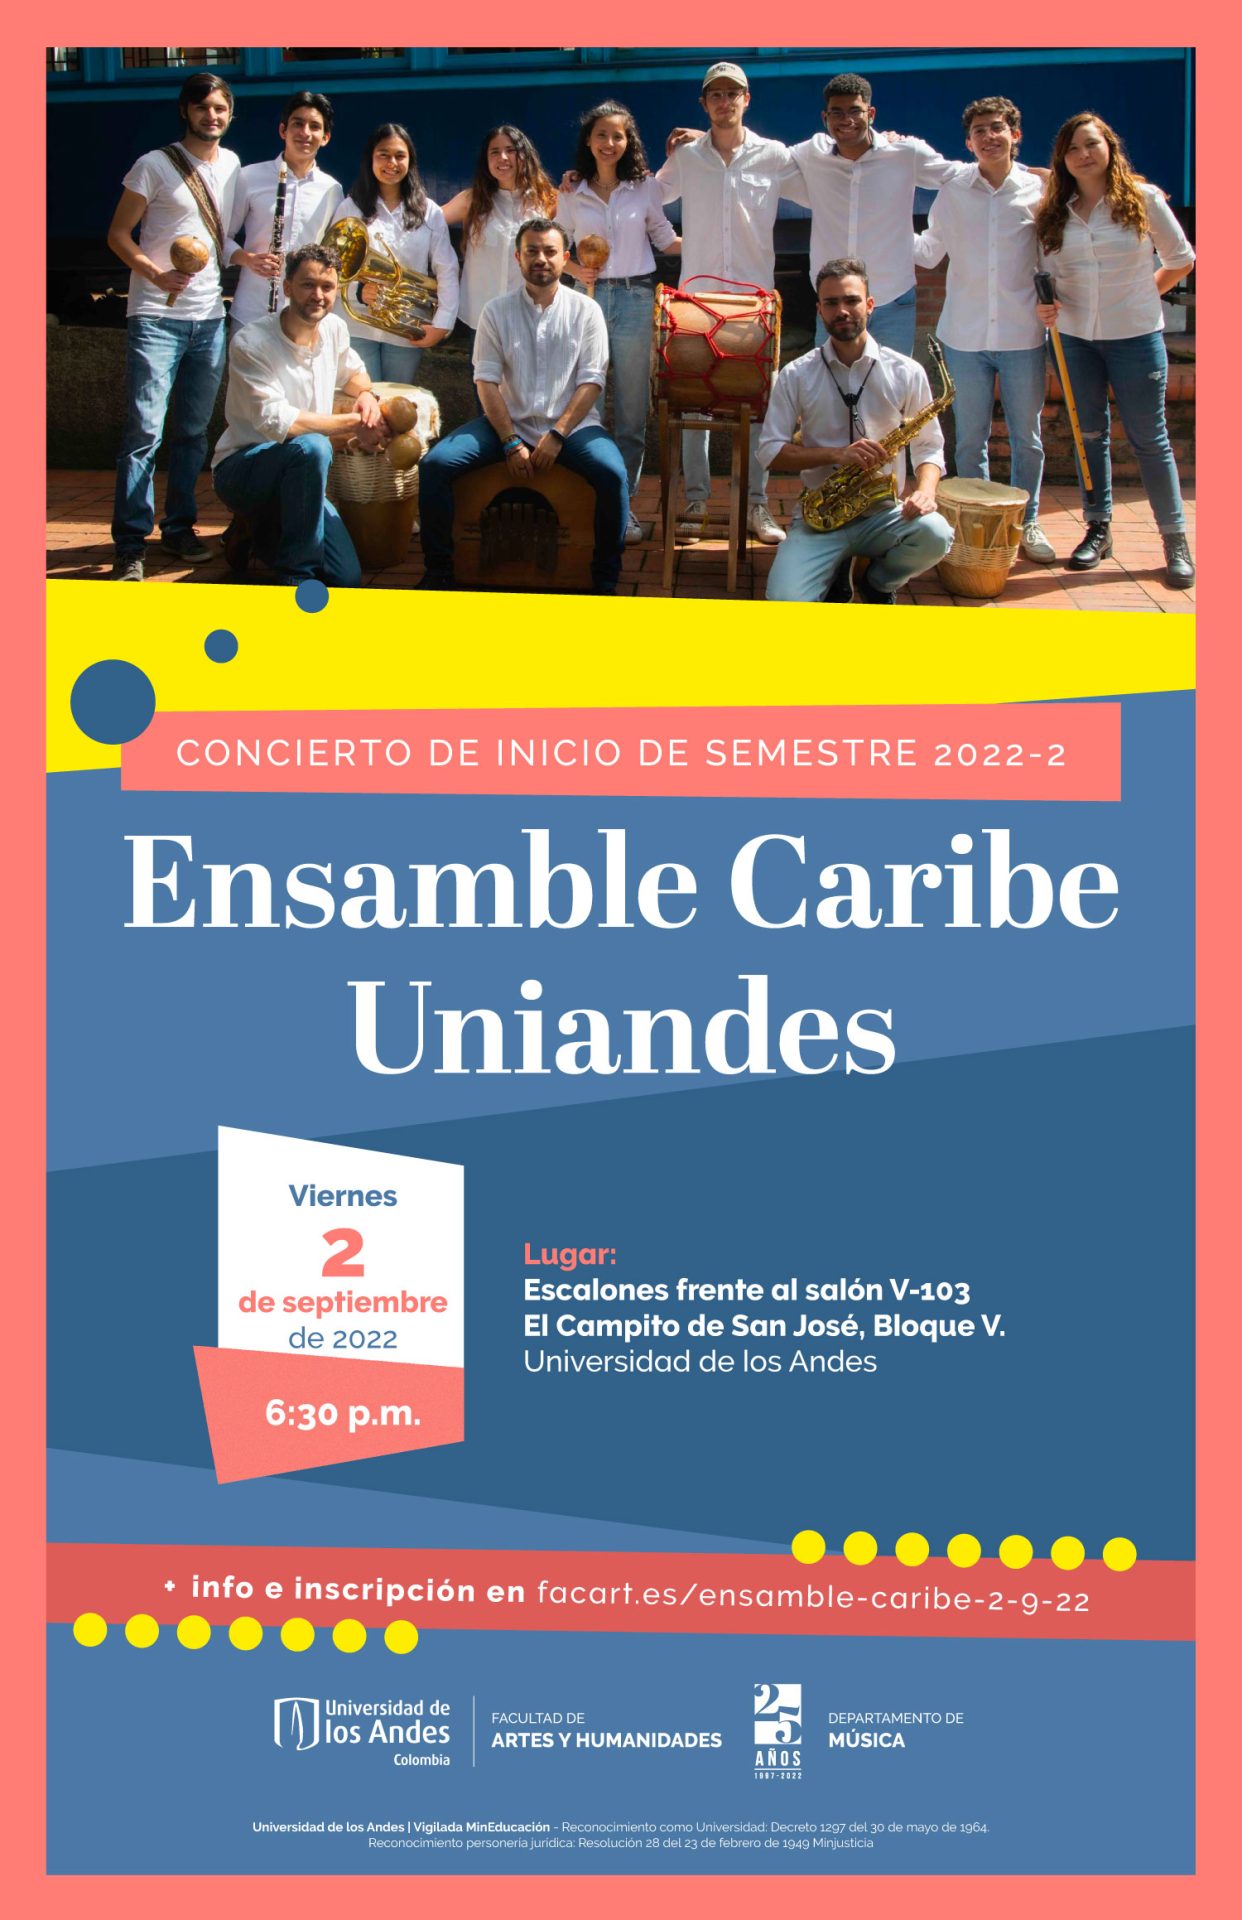 Ensamble-caribe-2022-2